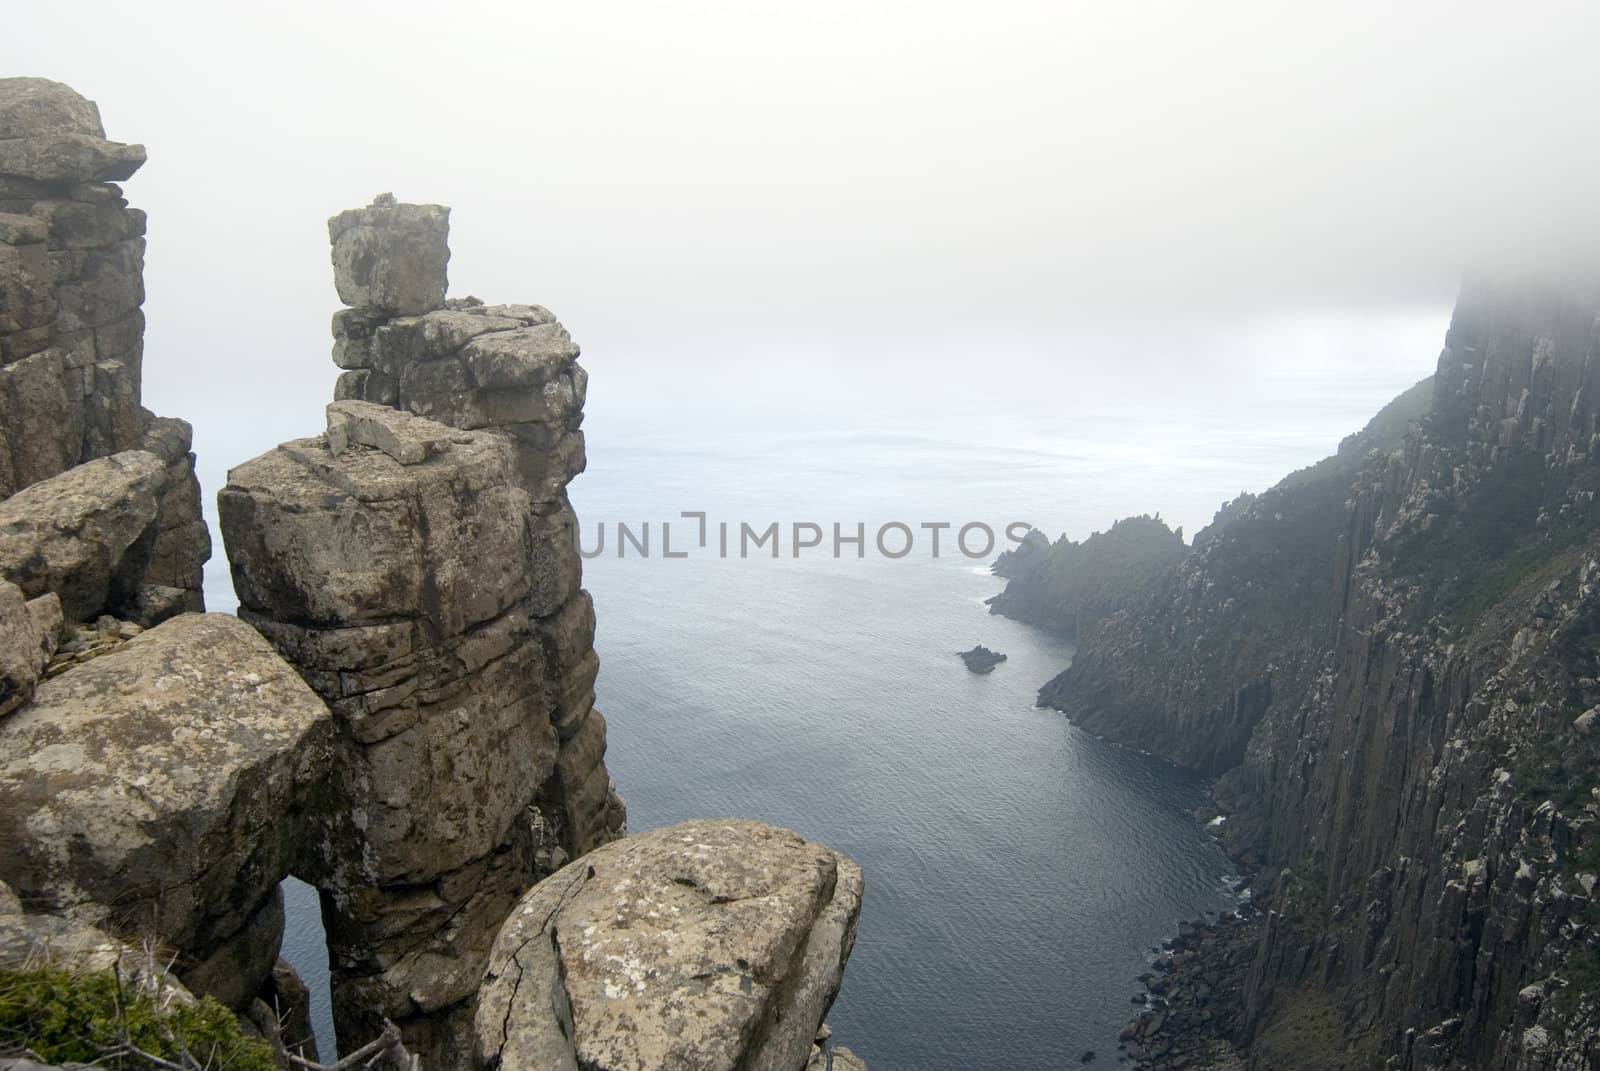 Precarious stacks of dolerite form the rugged cliffs of Cape Pillar, Tasmania